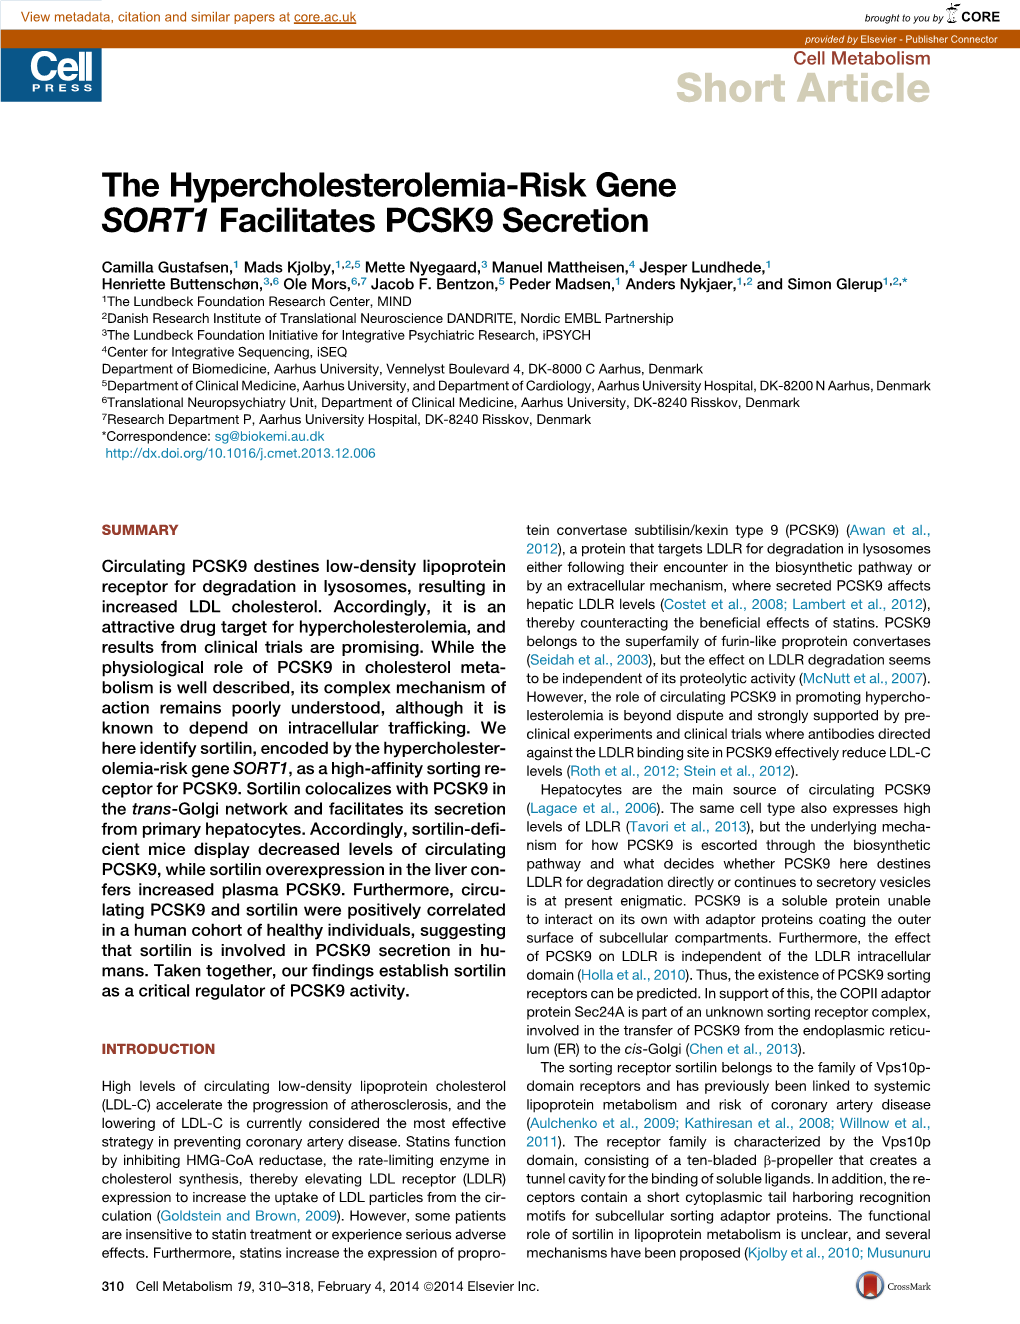 The Hypercholesterolemia-Risk Gene SORT1 Facilitates PCSK9 Secretion